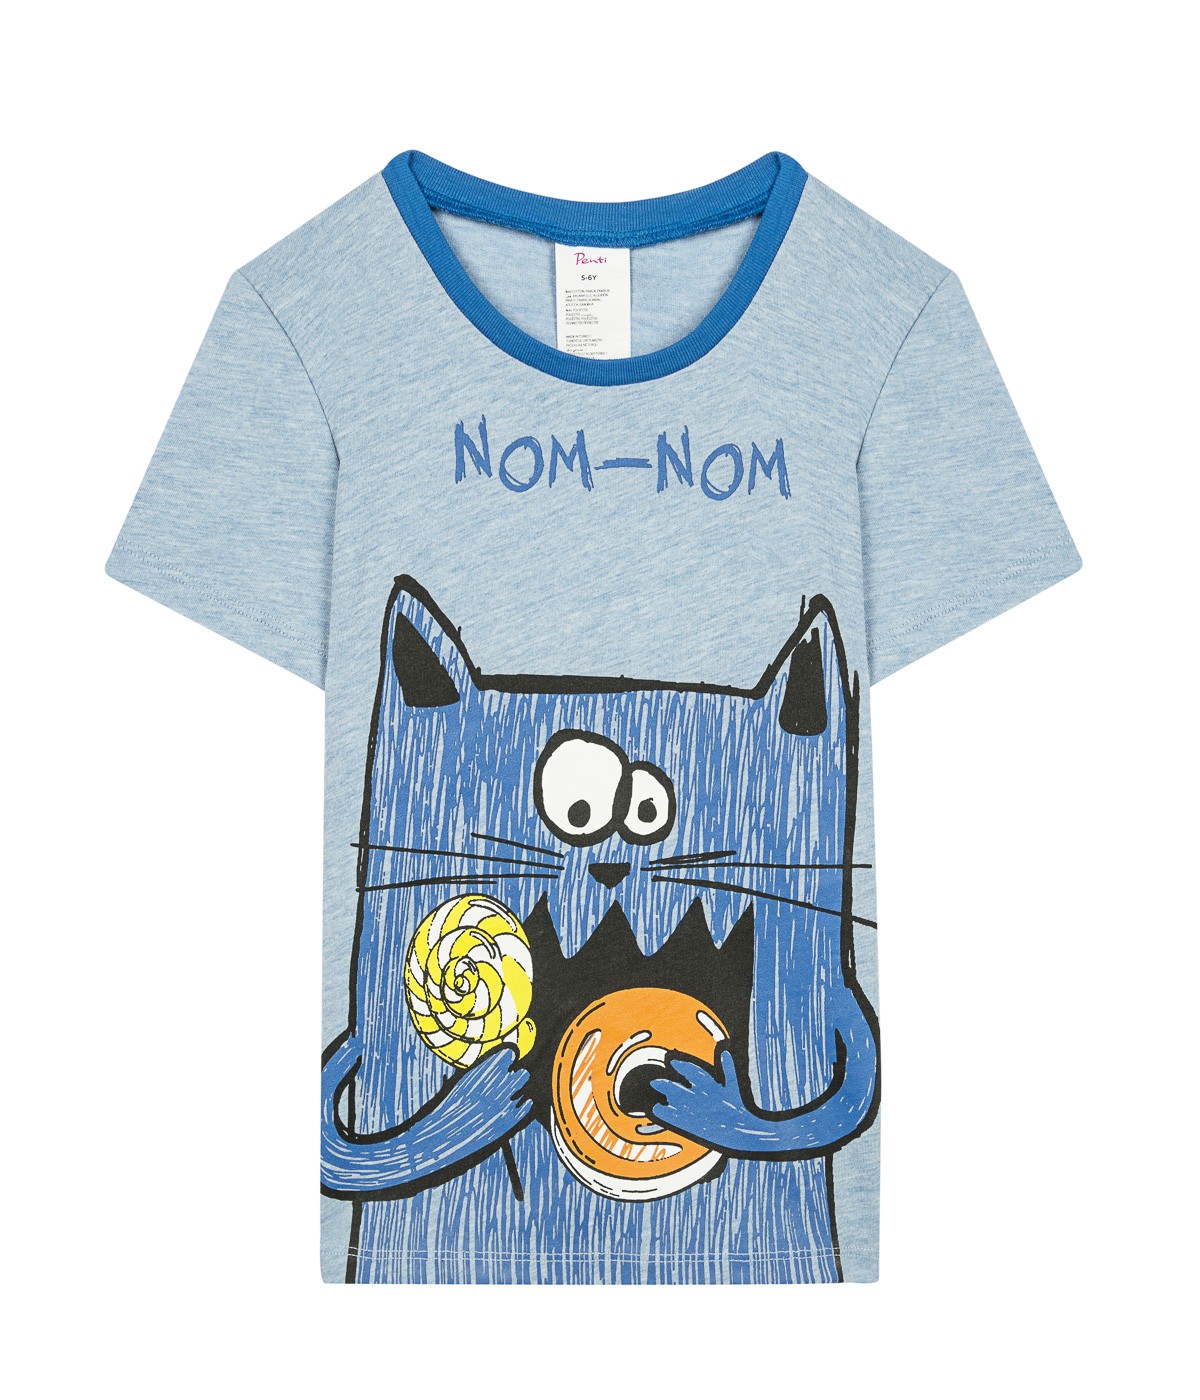 Boys Nom Nom Pyjamas 2 in 1 Set